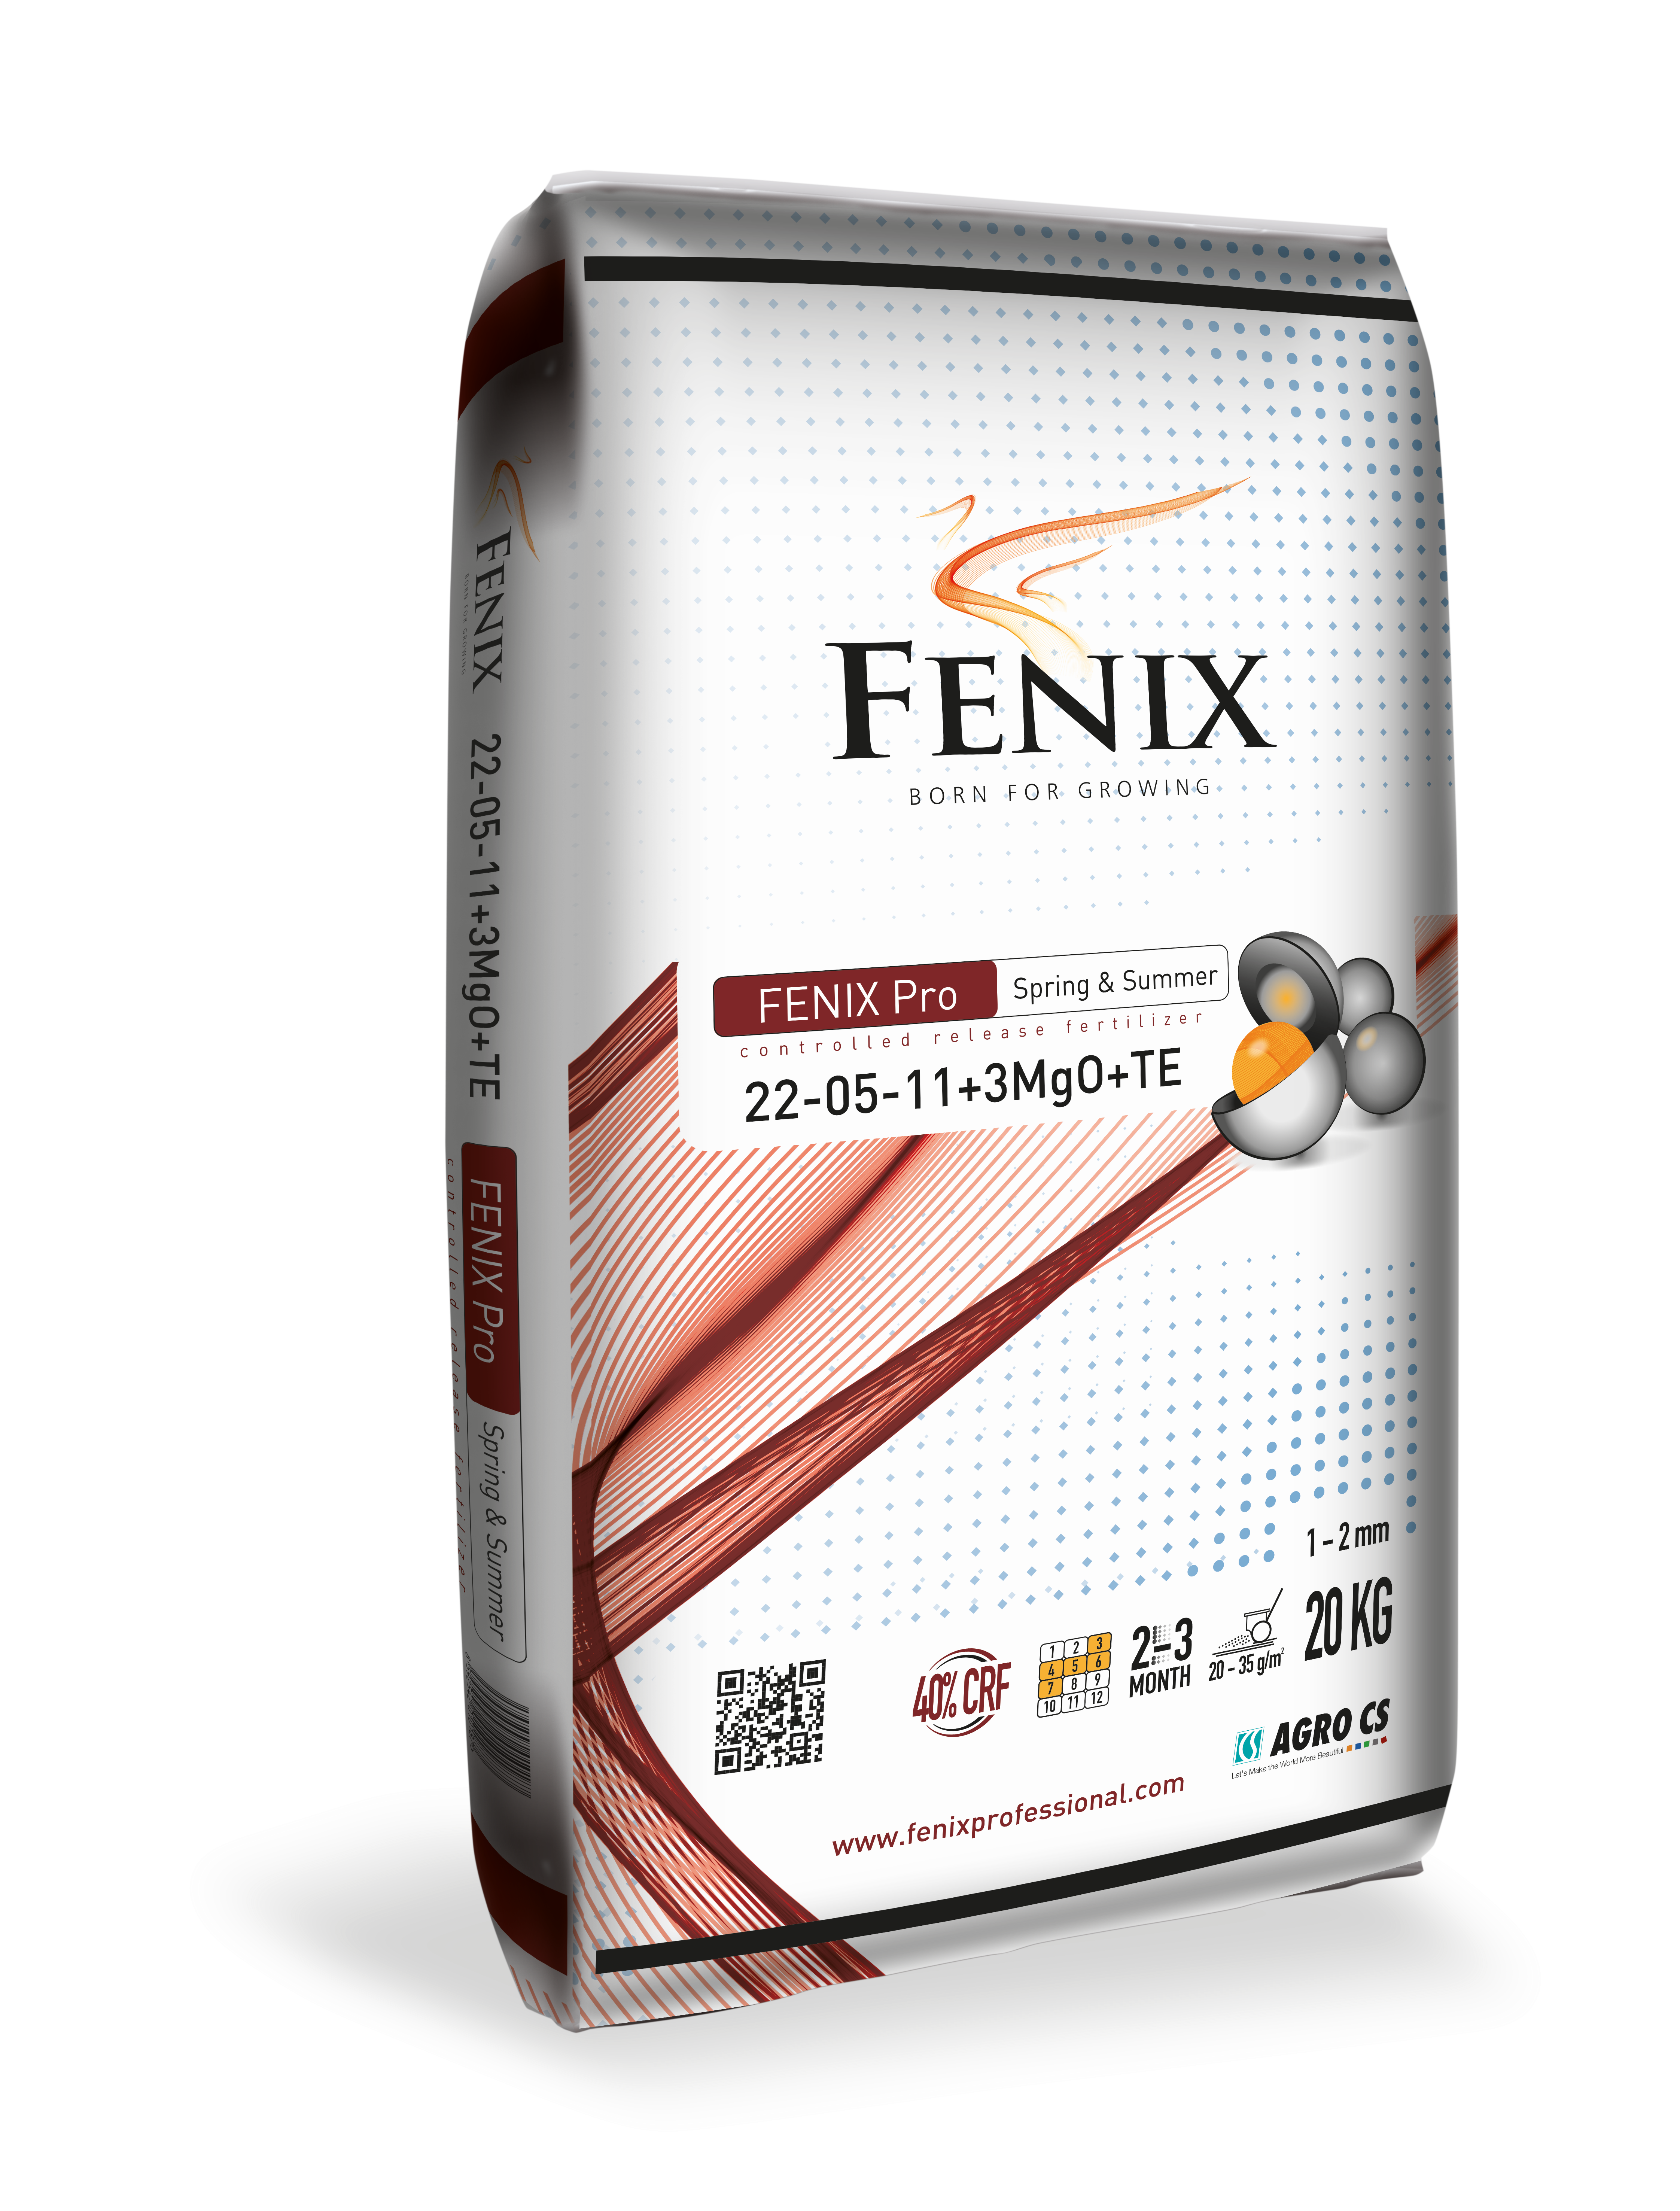 FENIX Pro Starter 19-19-5+2MgO